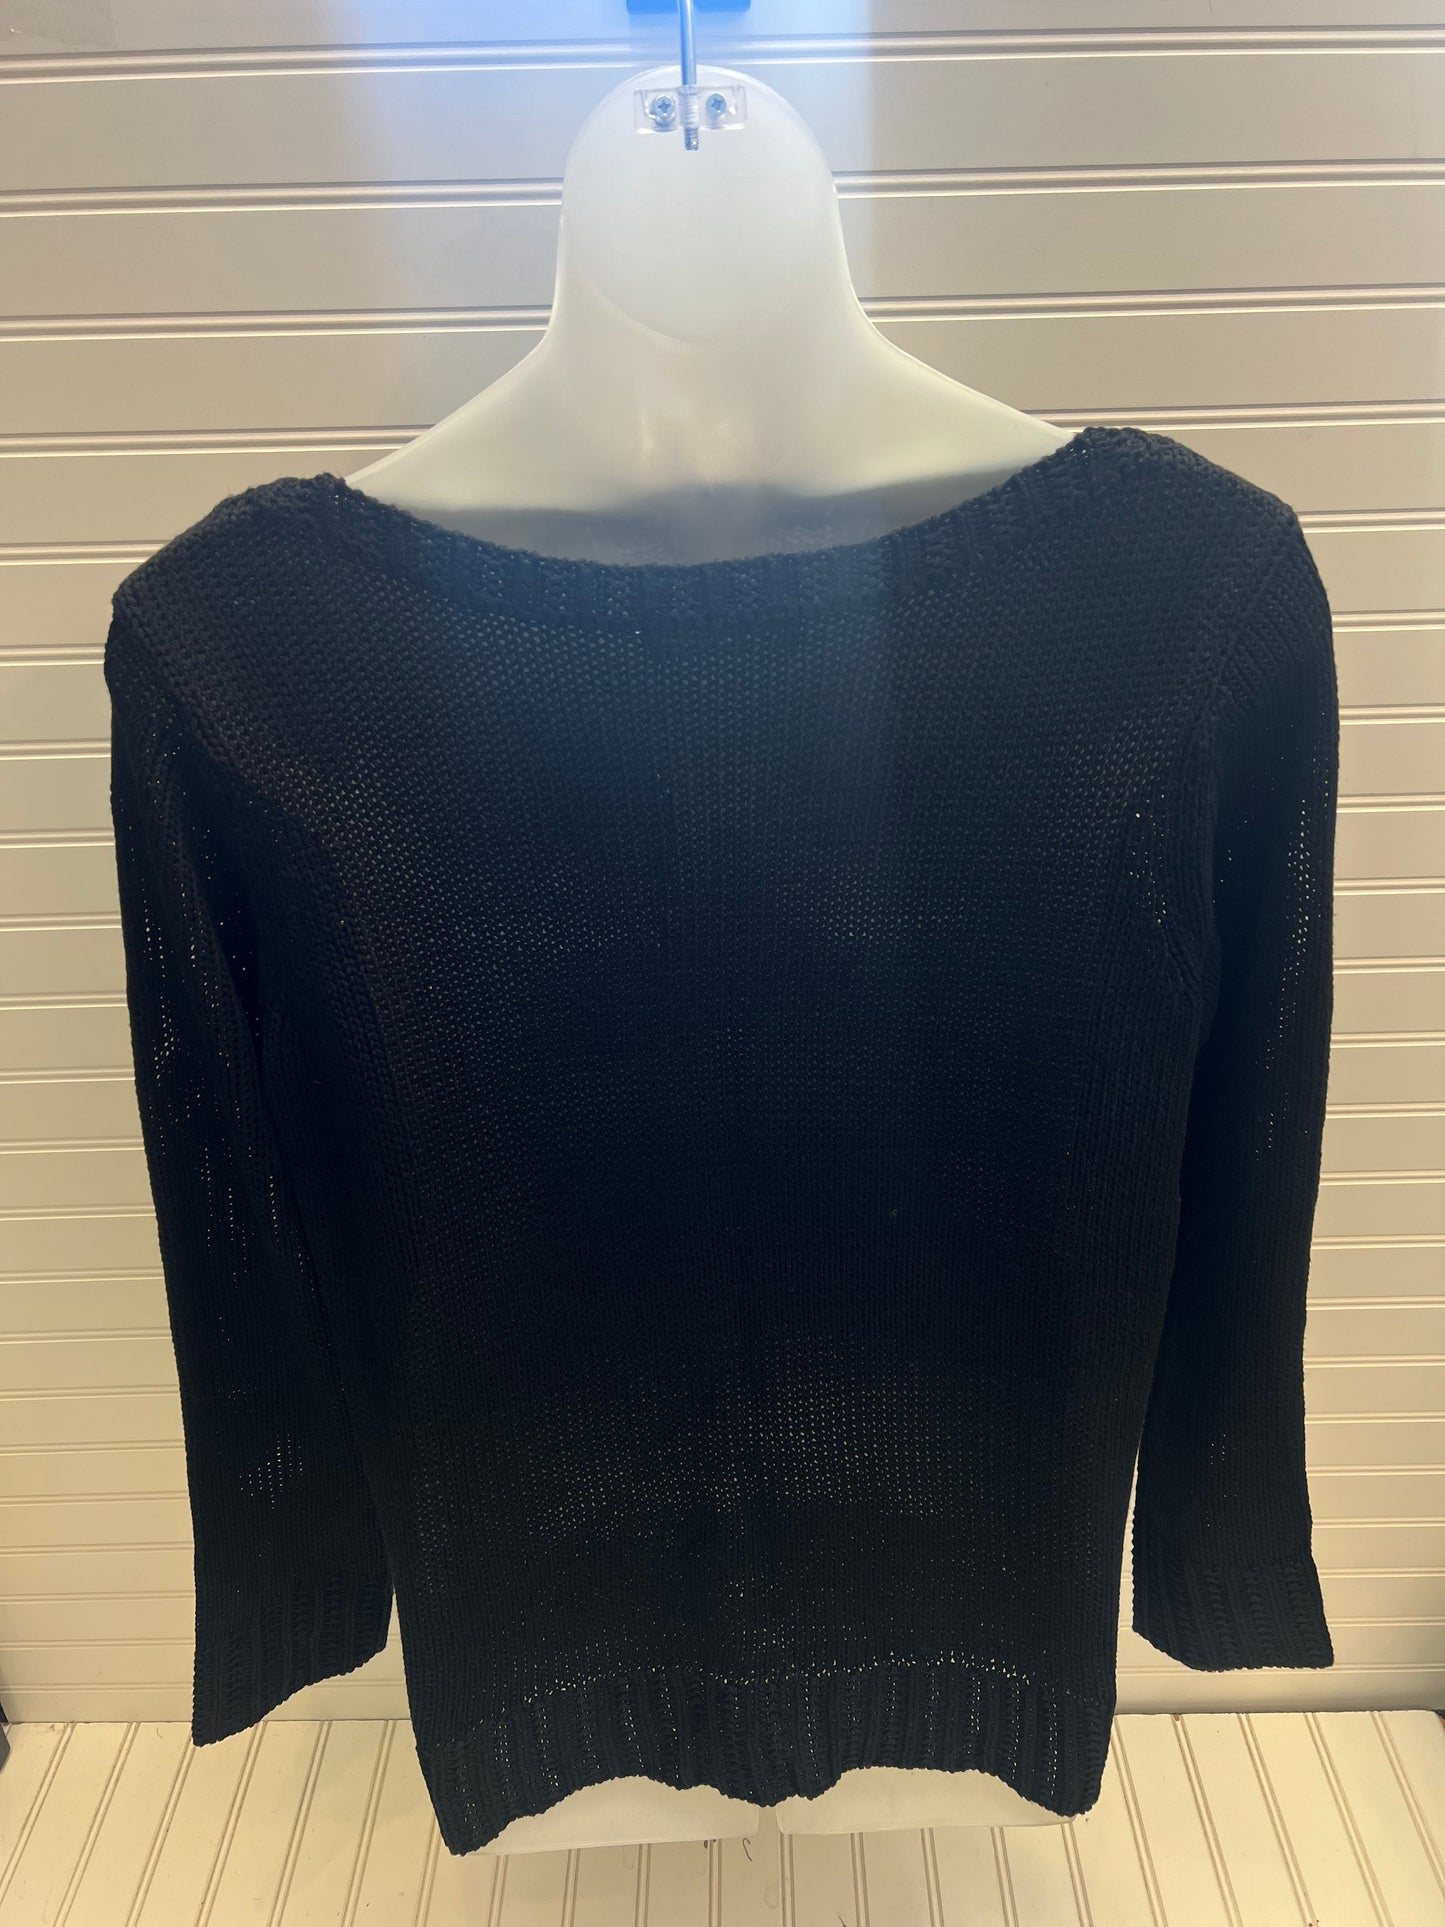 Sweater Designer By Lauren By Ralph Lauren  Size: 2x